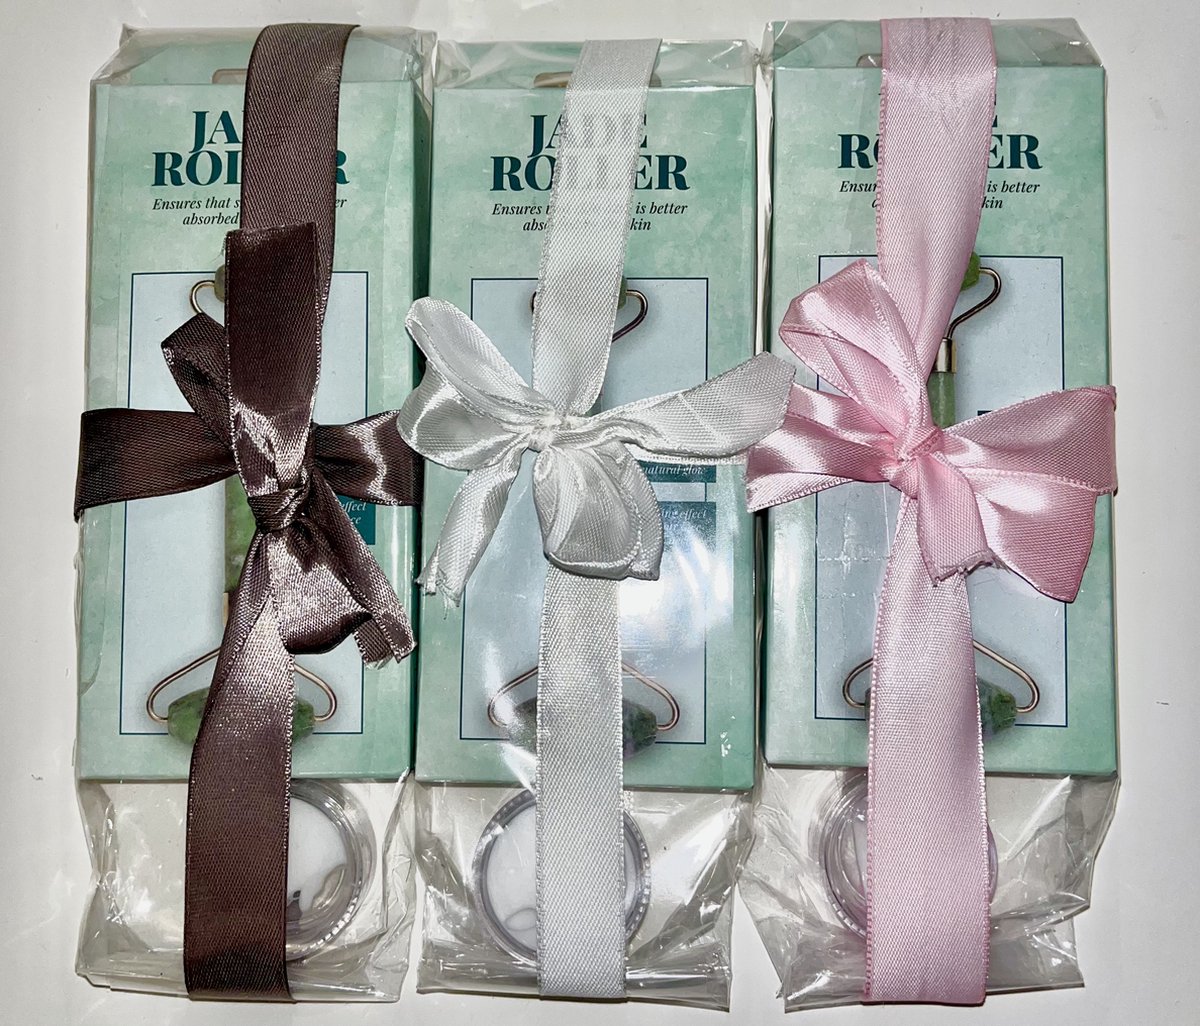 Jade Roller cadeau set + crème - kerstcadeau - feestartikelen - verjaardagtip - gelegenheid- jade roller - beauty